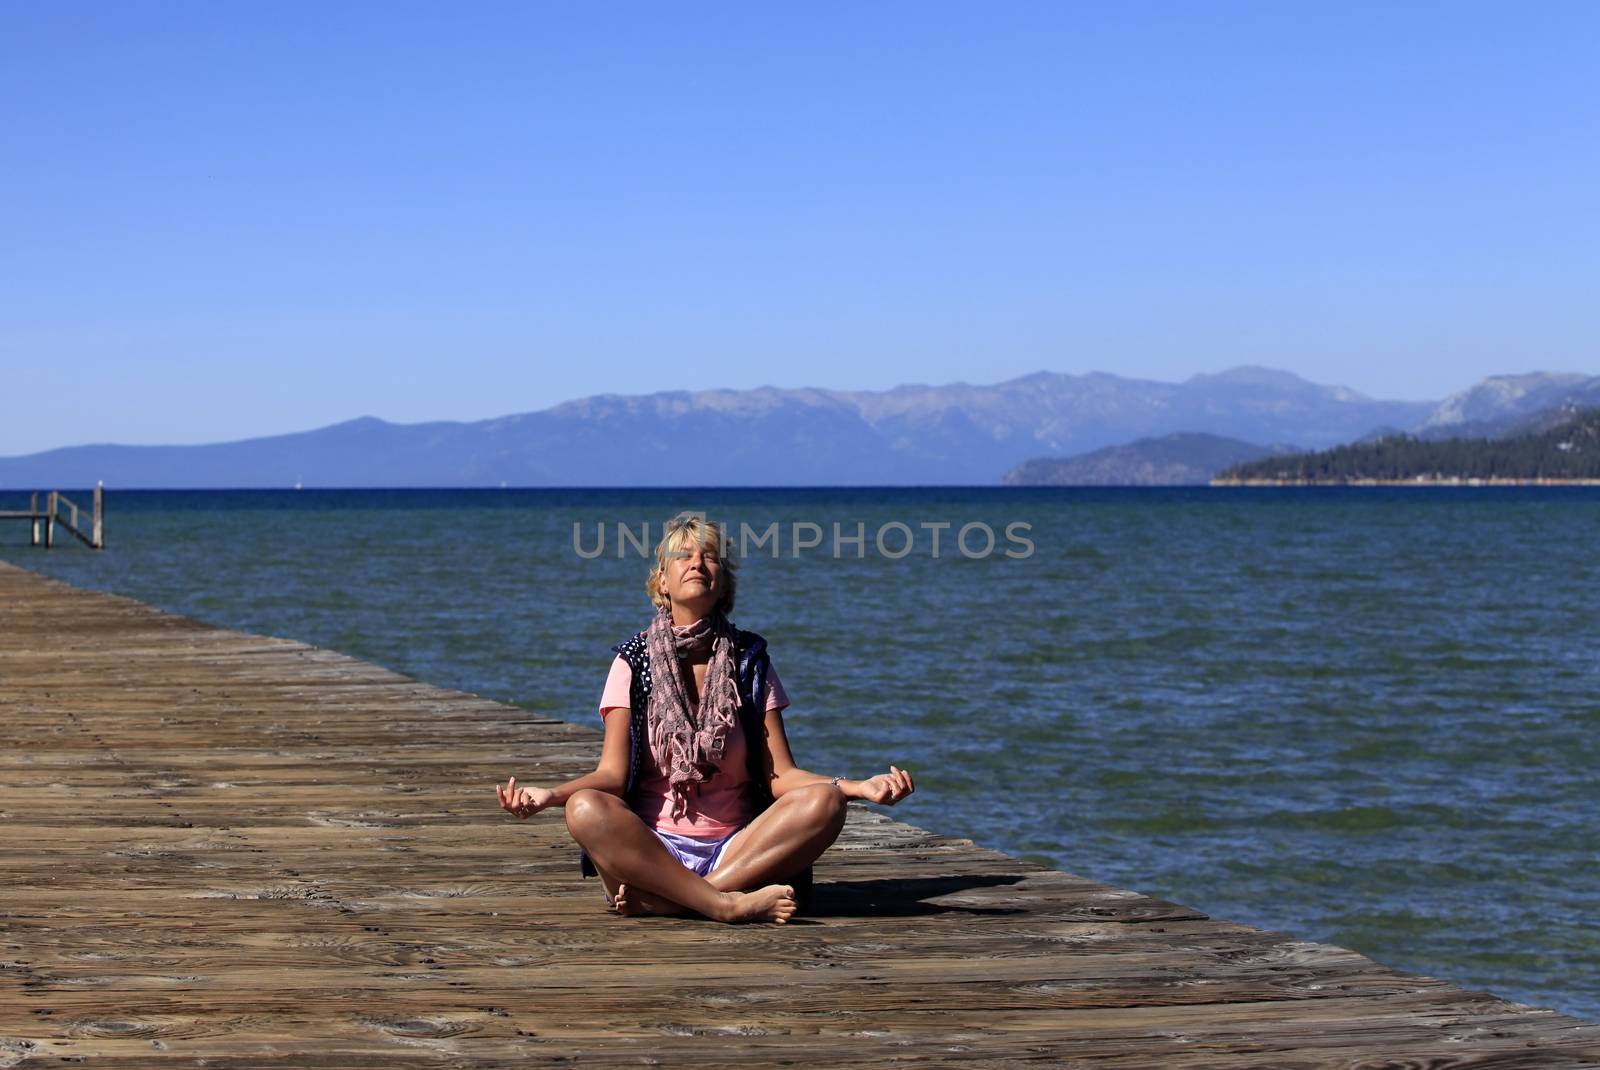 Meditation girl yoga on the beach on Lake Tahoe